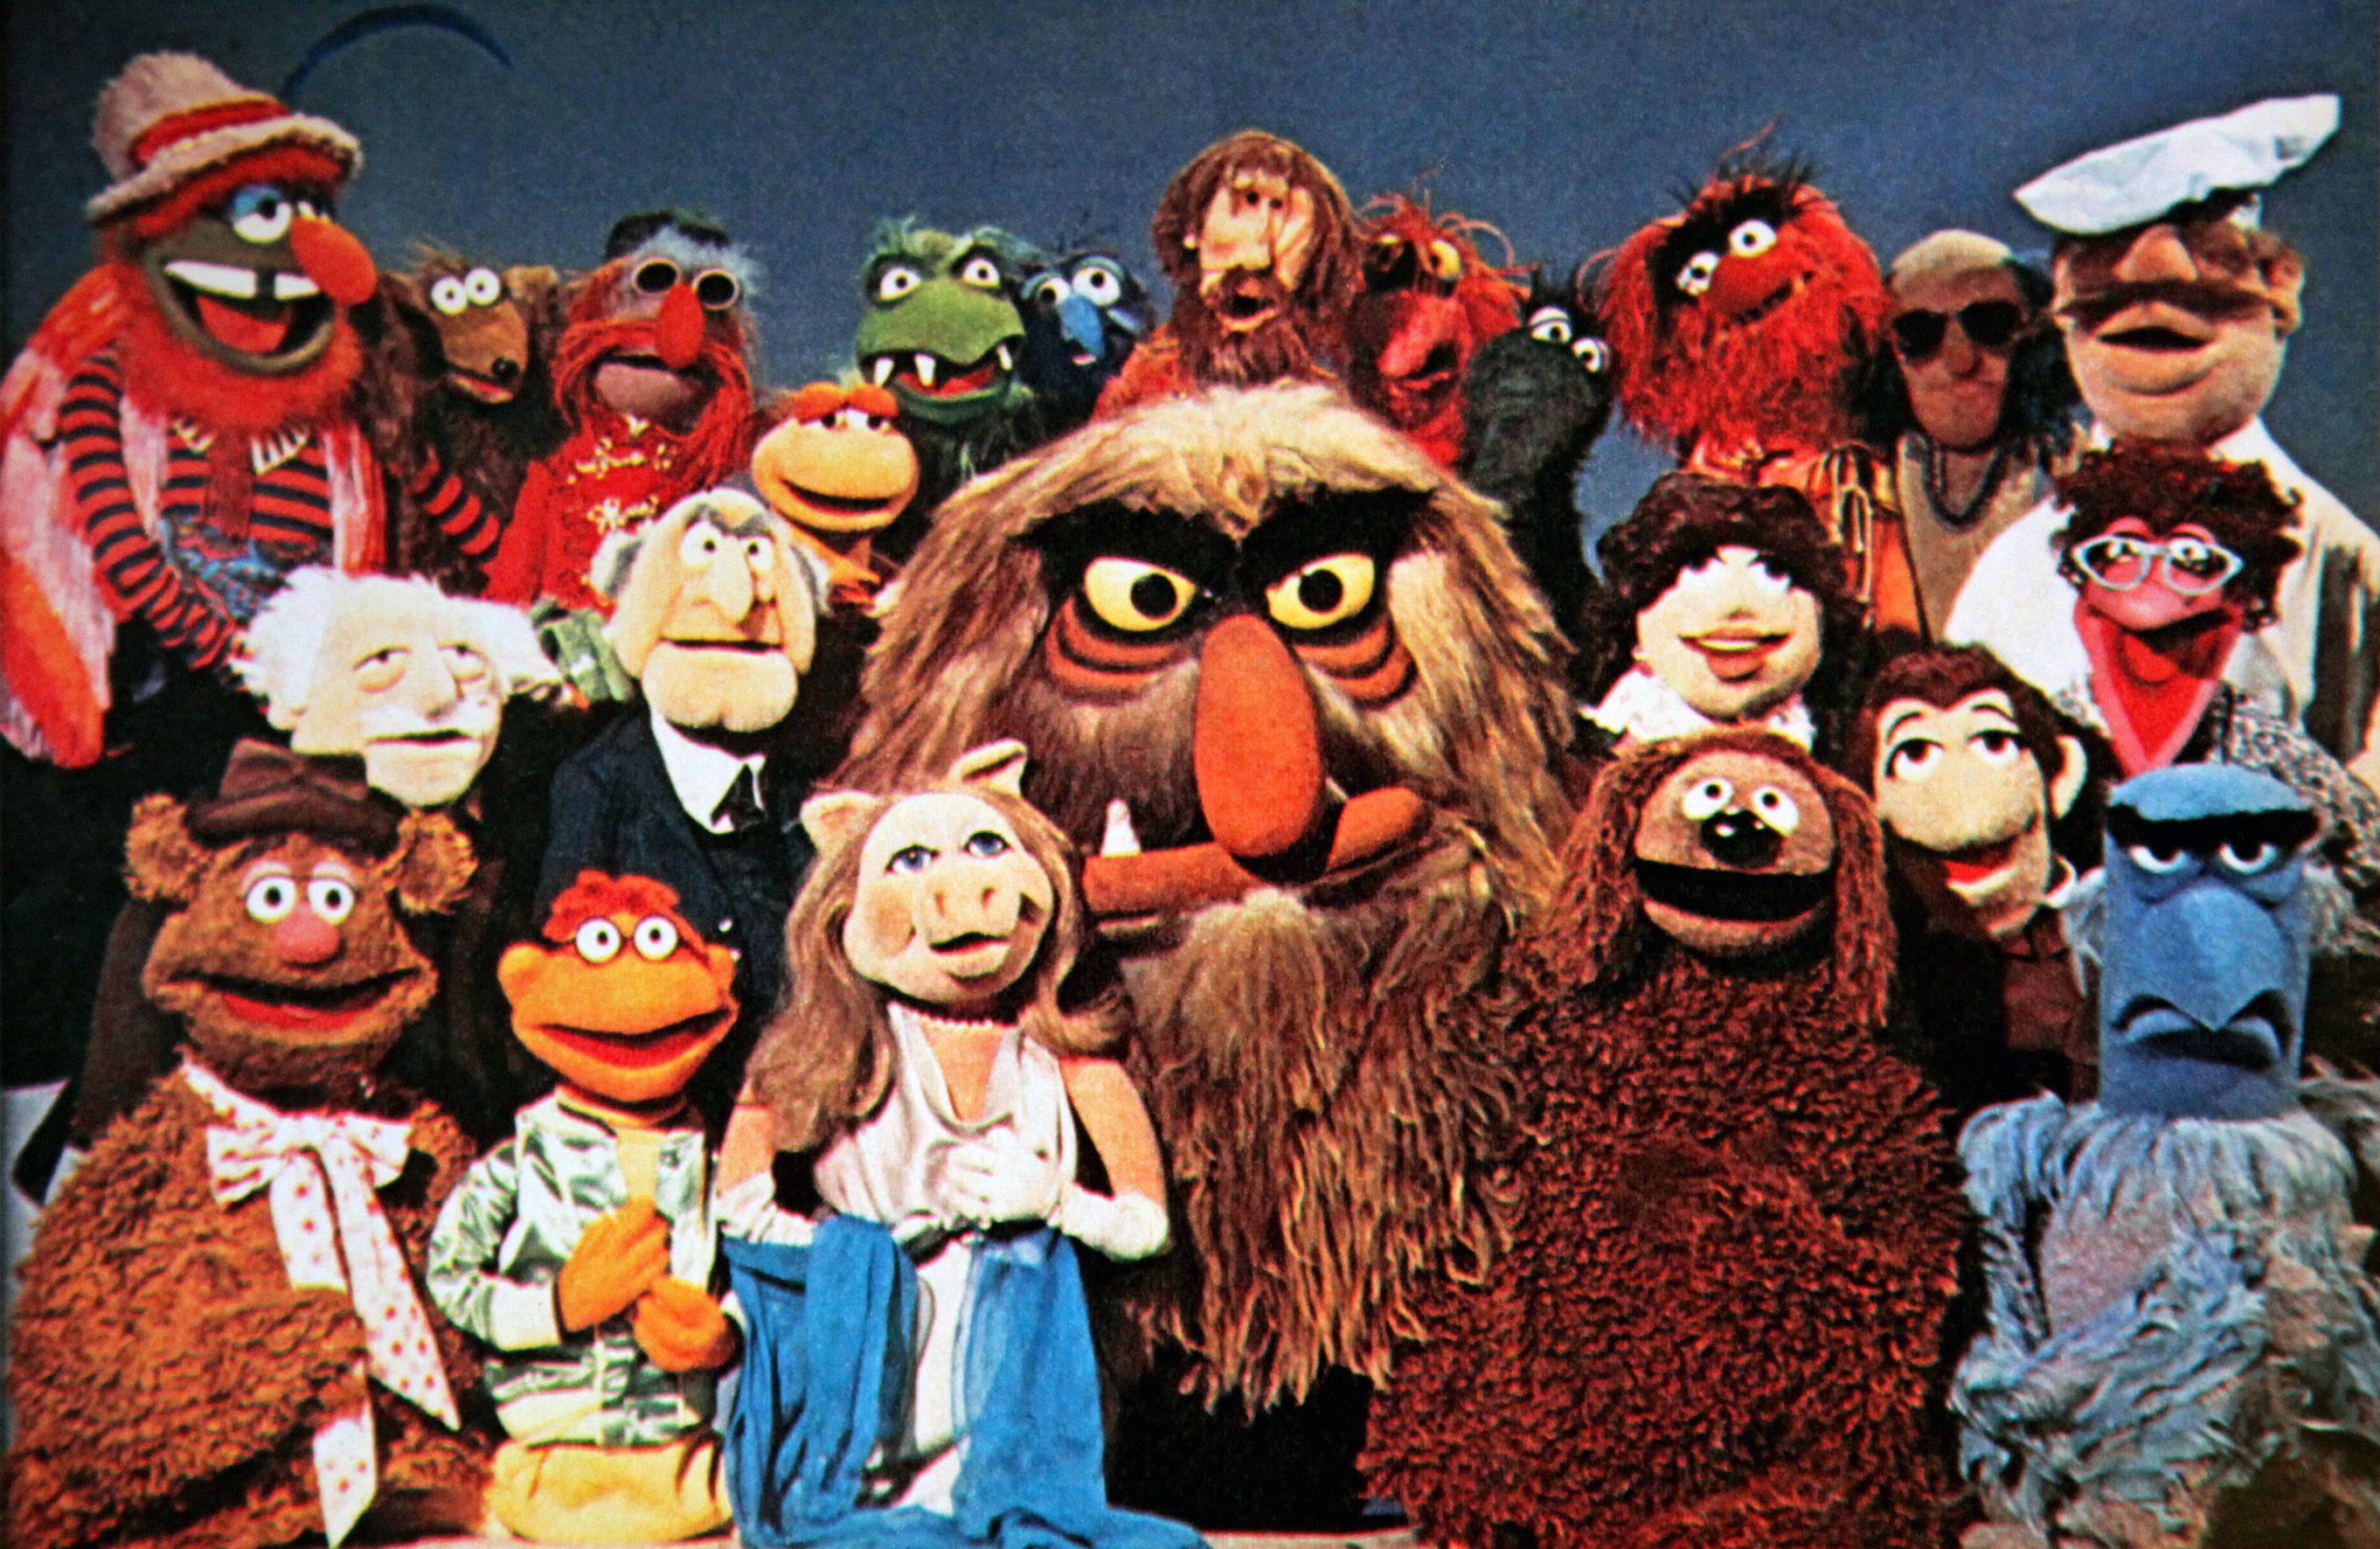 The Muppets HD wallpapers, Desktop wallpaper - most viewed